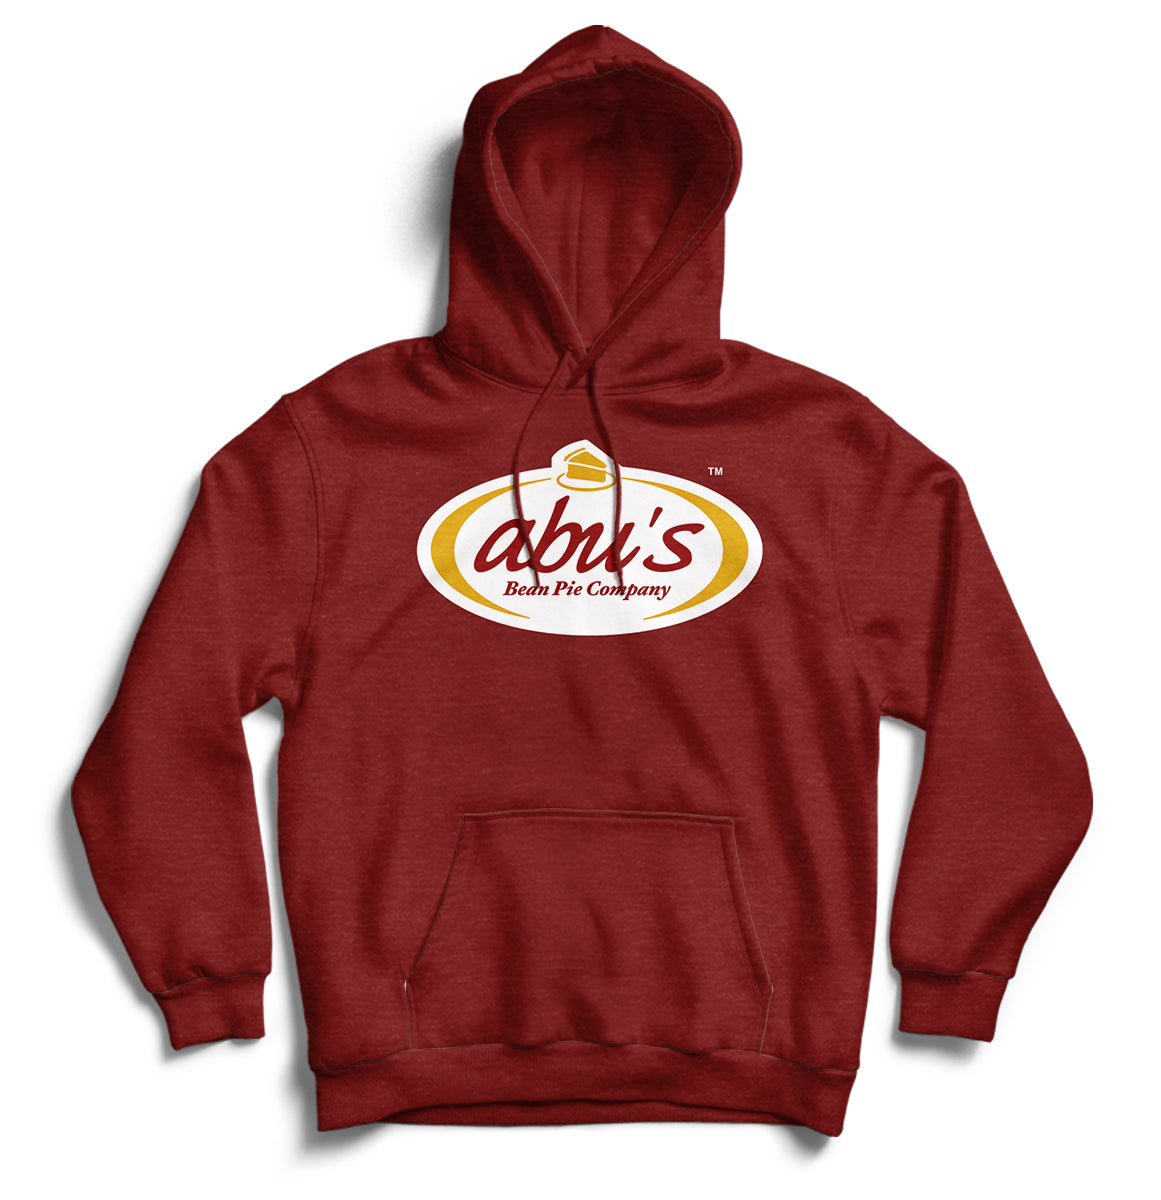 Abu's Logo Hoody